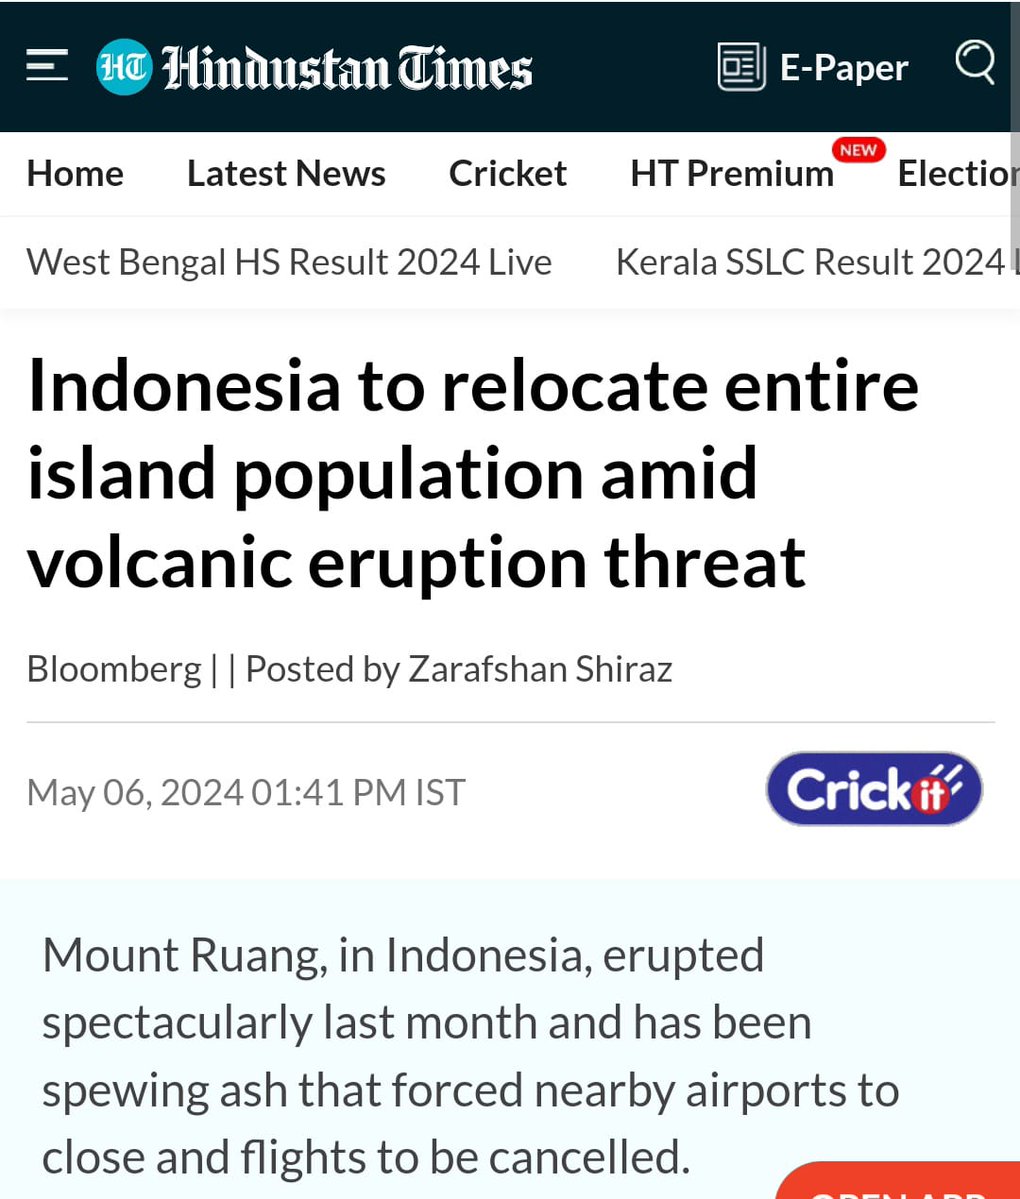 Volcano eruption in Indonesia!